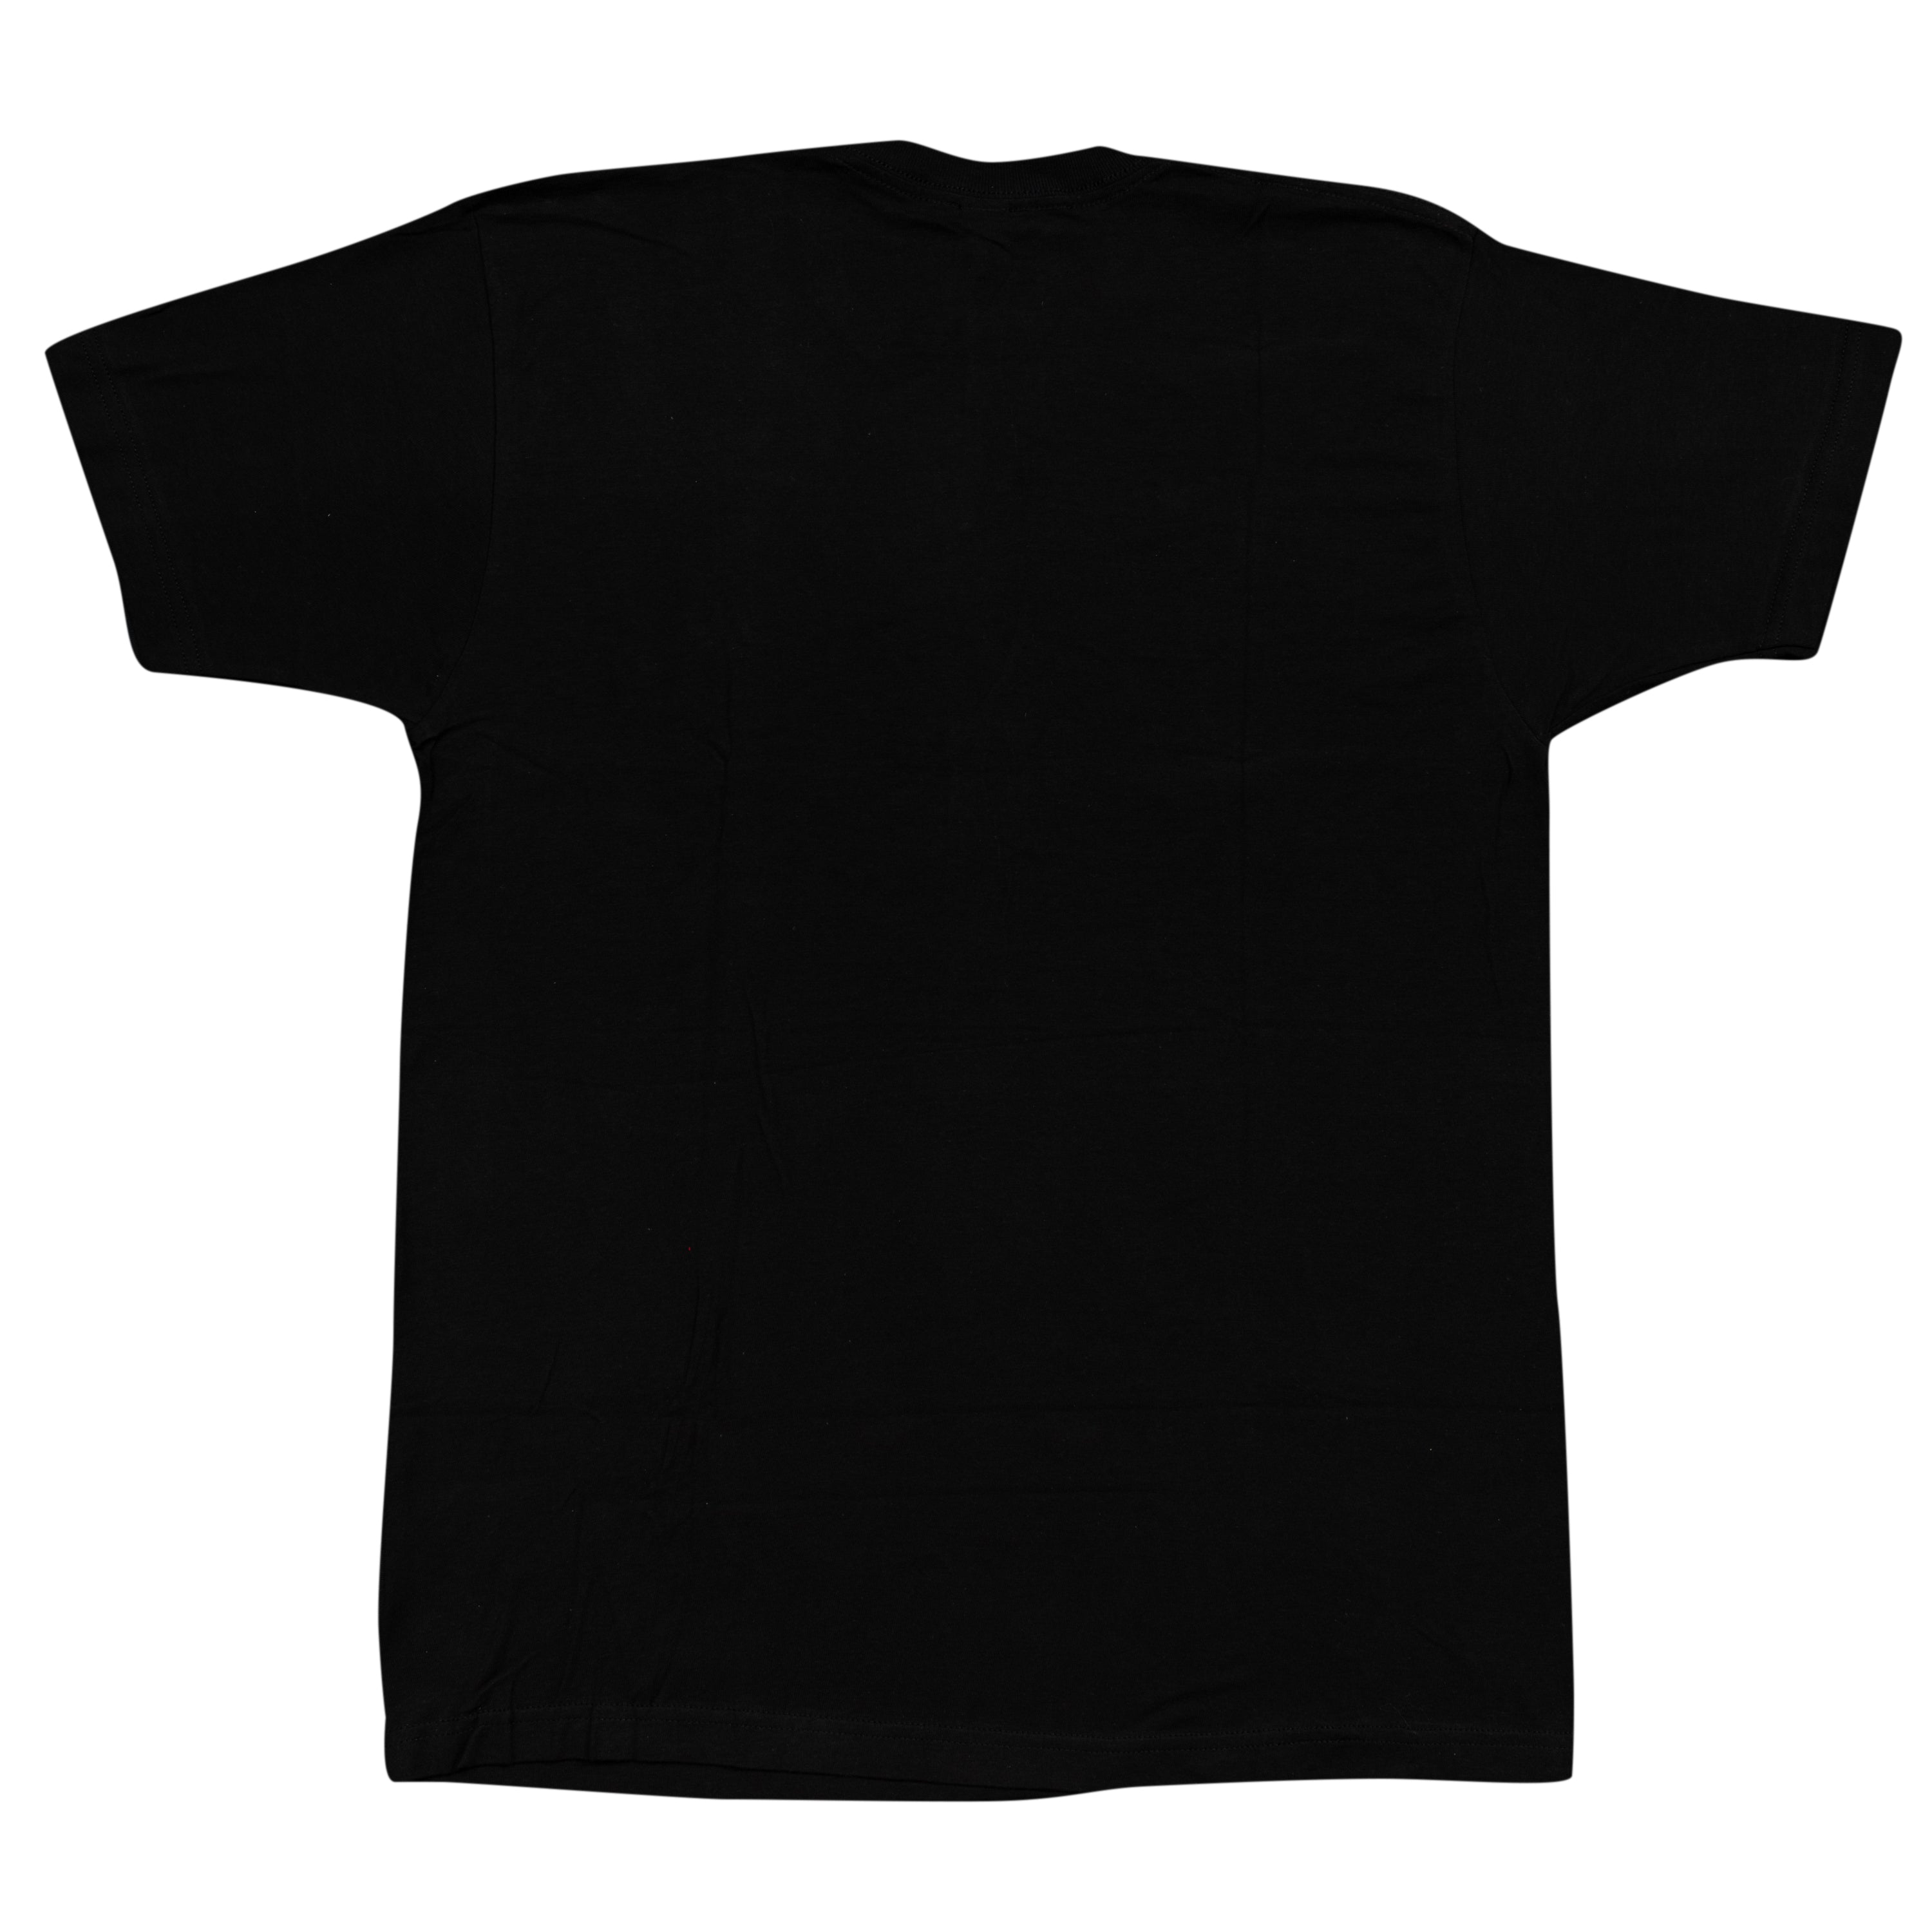 Miami Vice Distressed Logo Adult Black T-Shirt